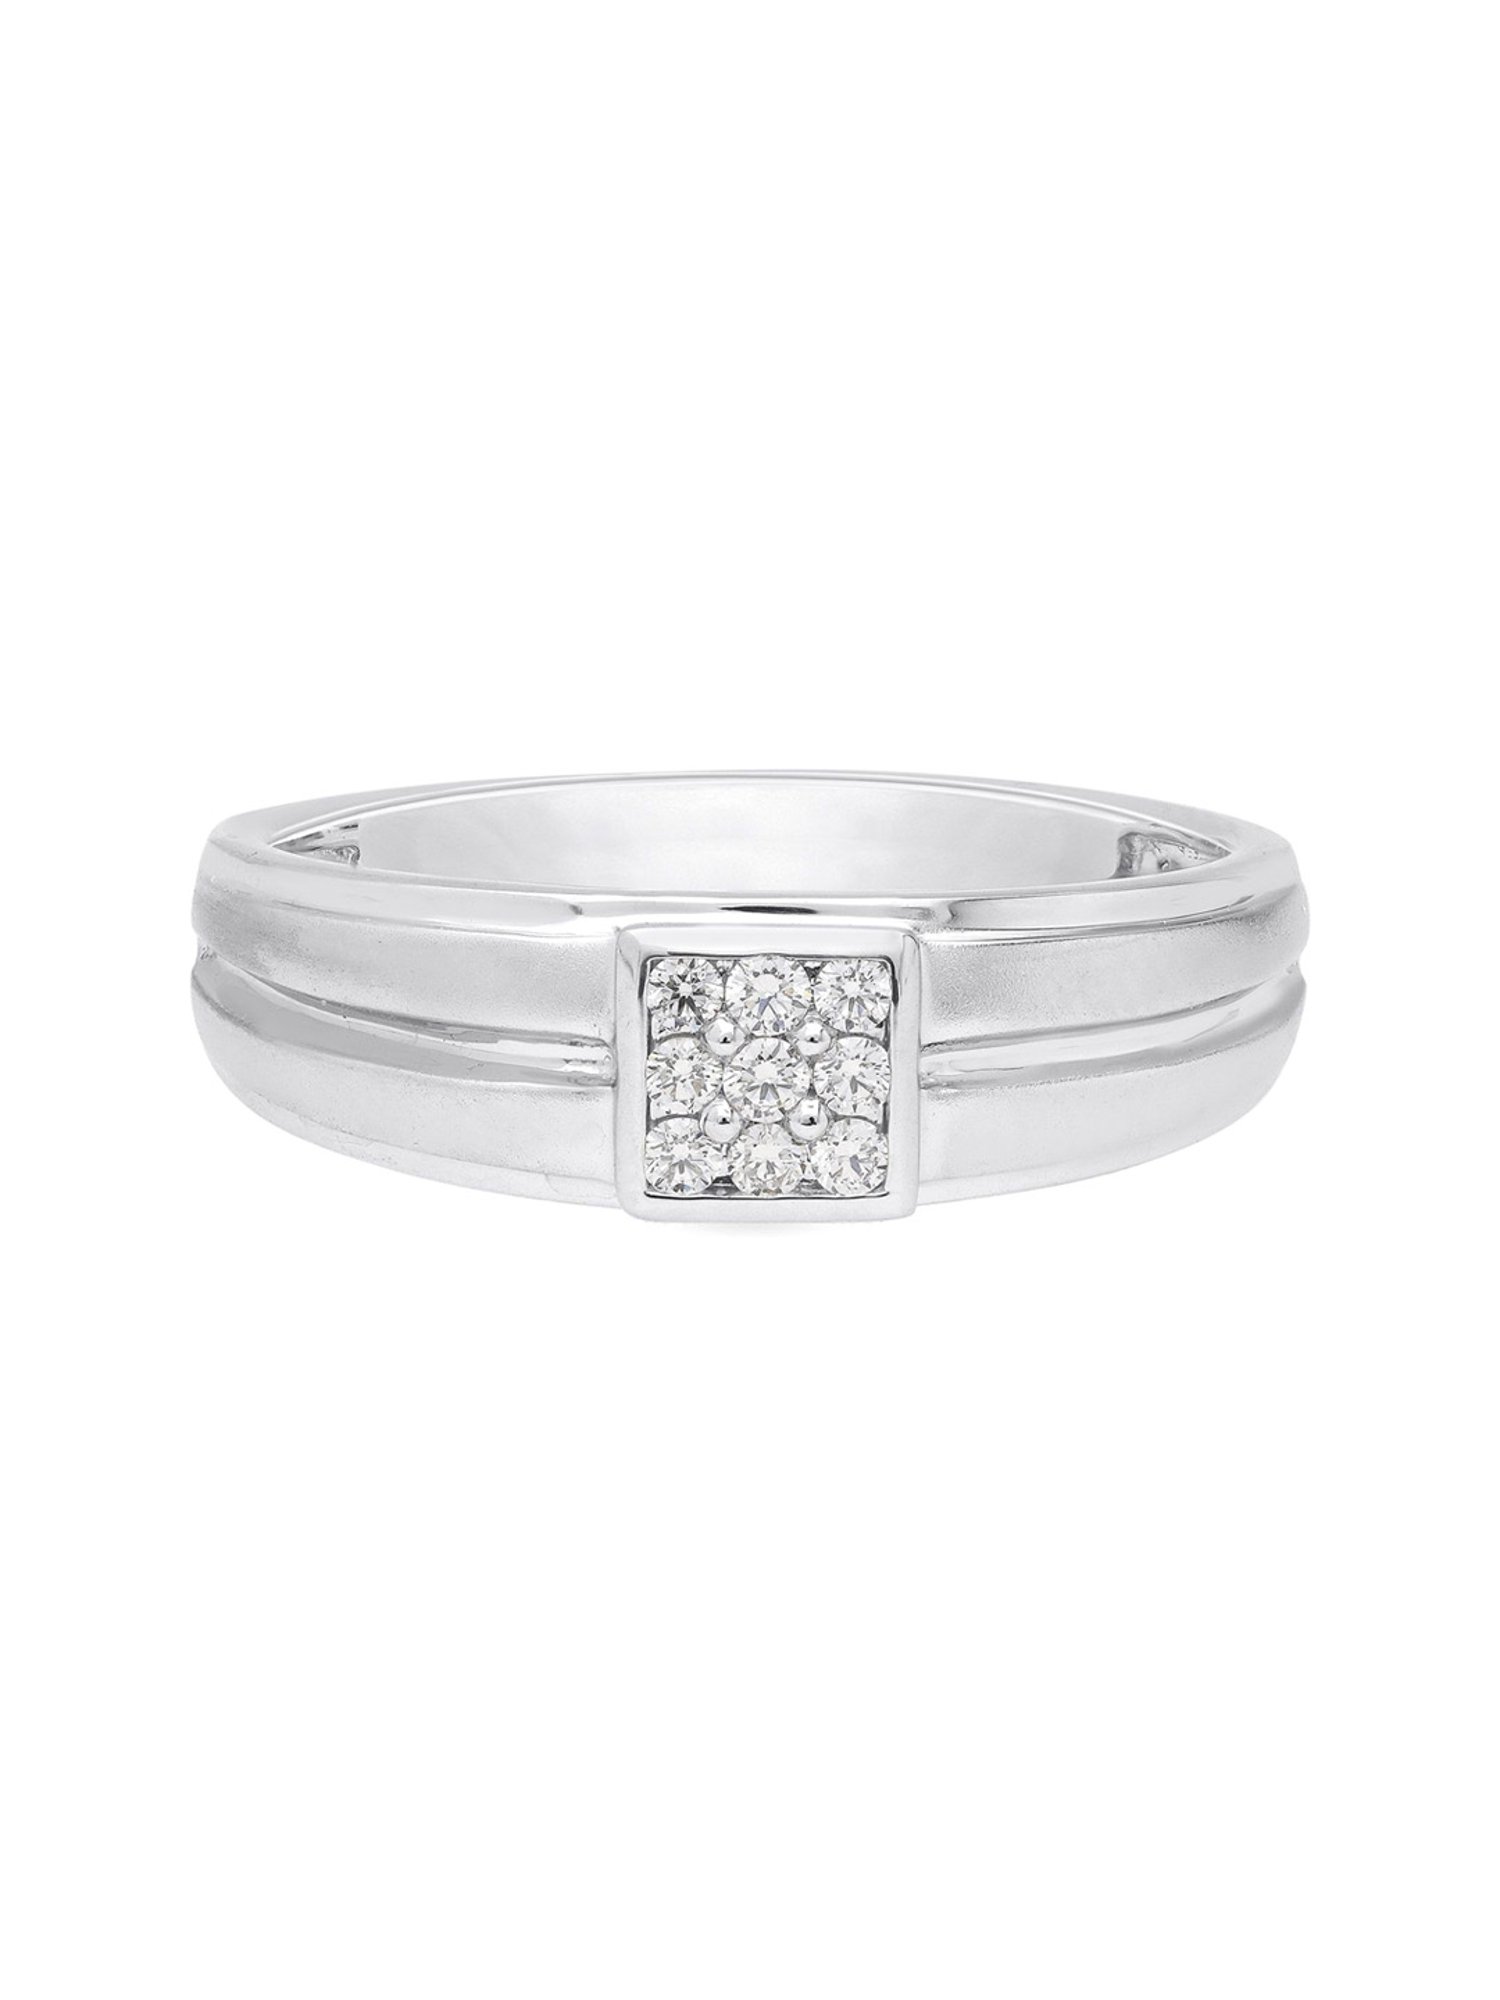 Silver Platinum Couple Rings, 10mm (dia) at Rs 4500/gram in Mumbai | ID:  2852470036512